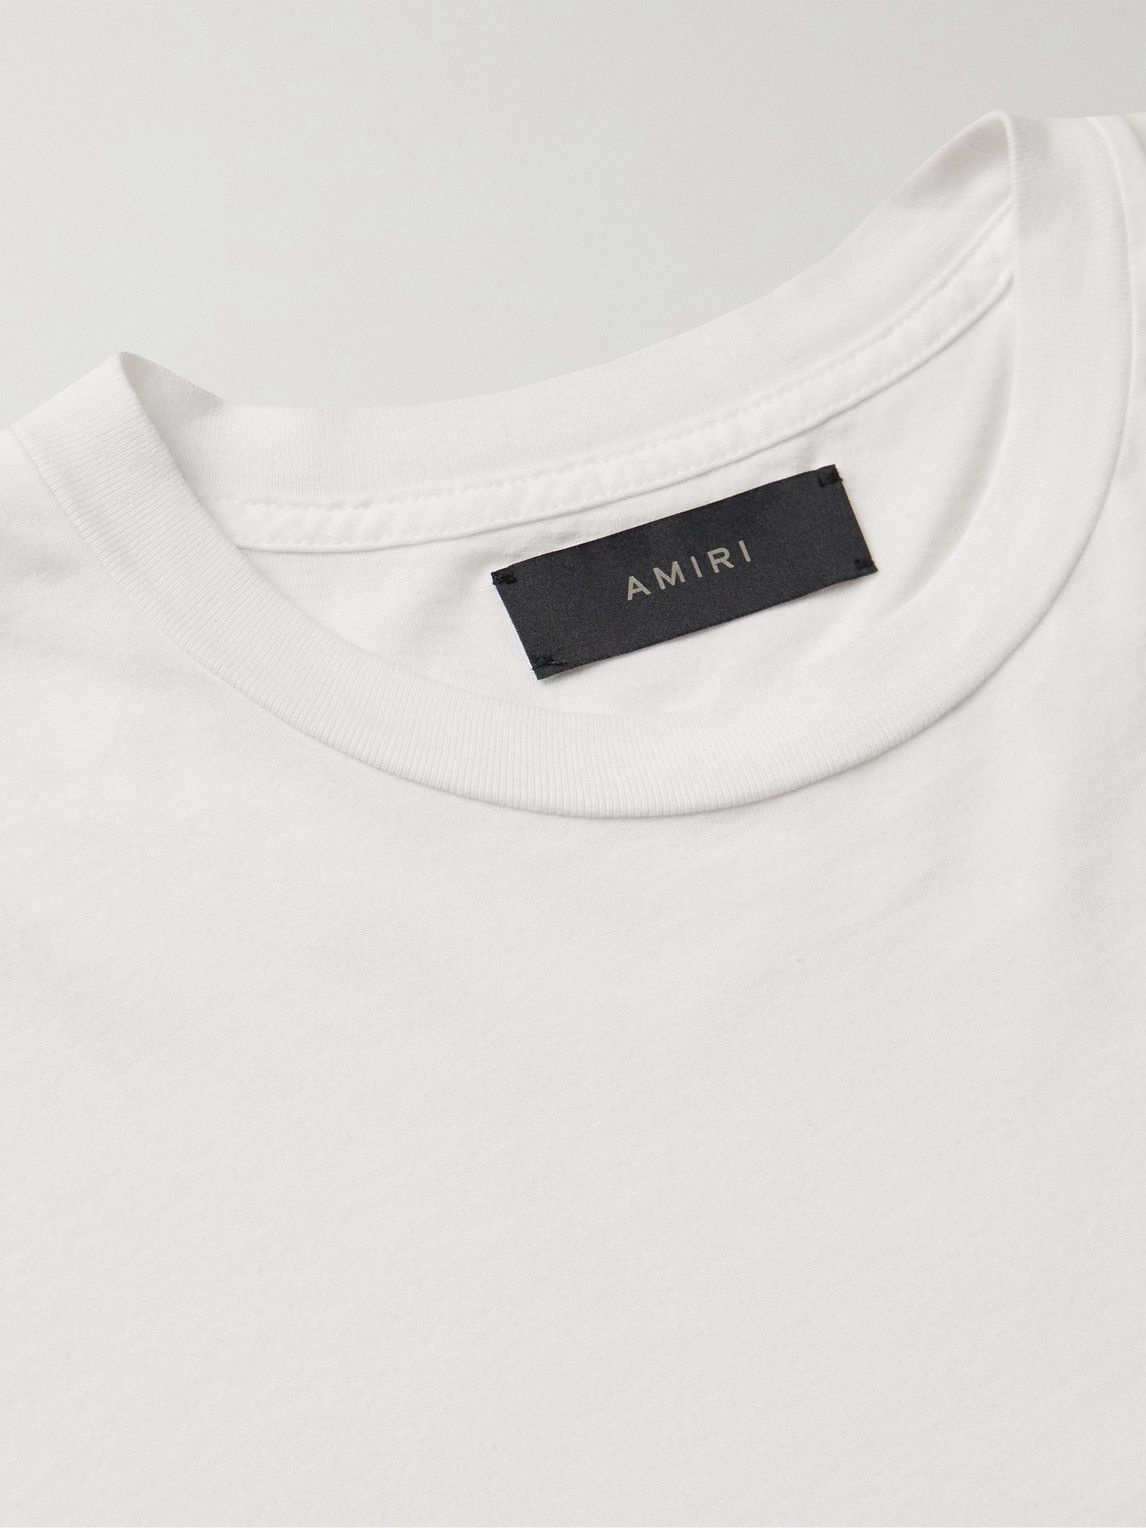 Amiri Shirt ( New Variety Available on Amiri Store )